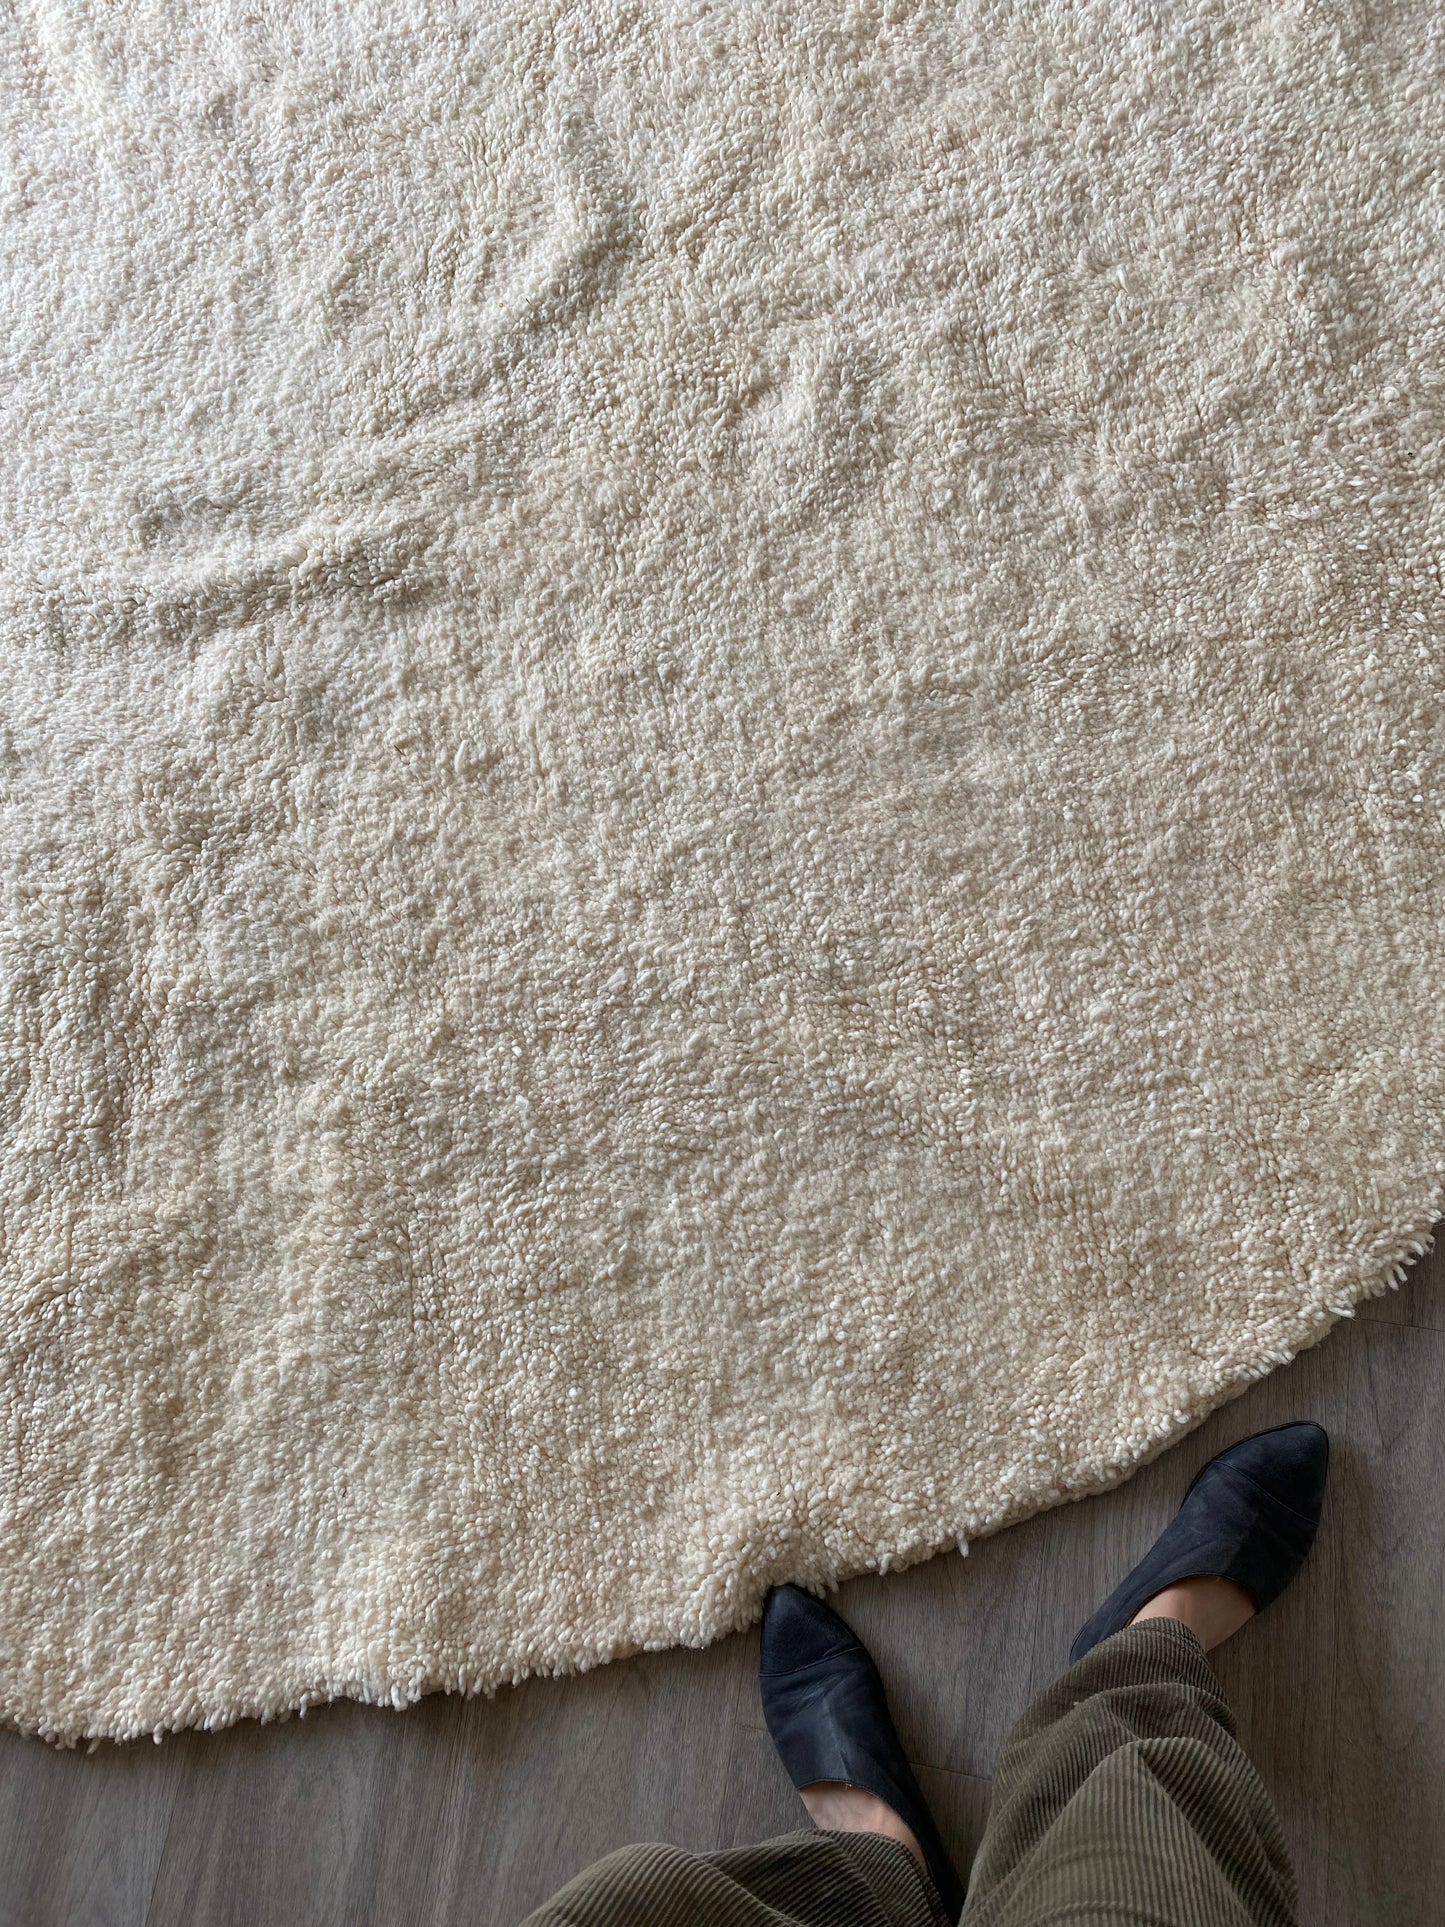 Tapis berbère blanc rond (549) 320cm de diamètre